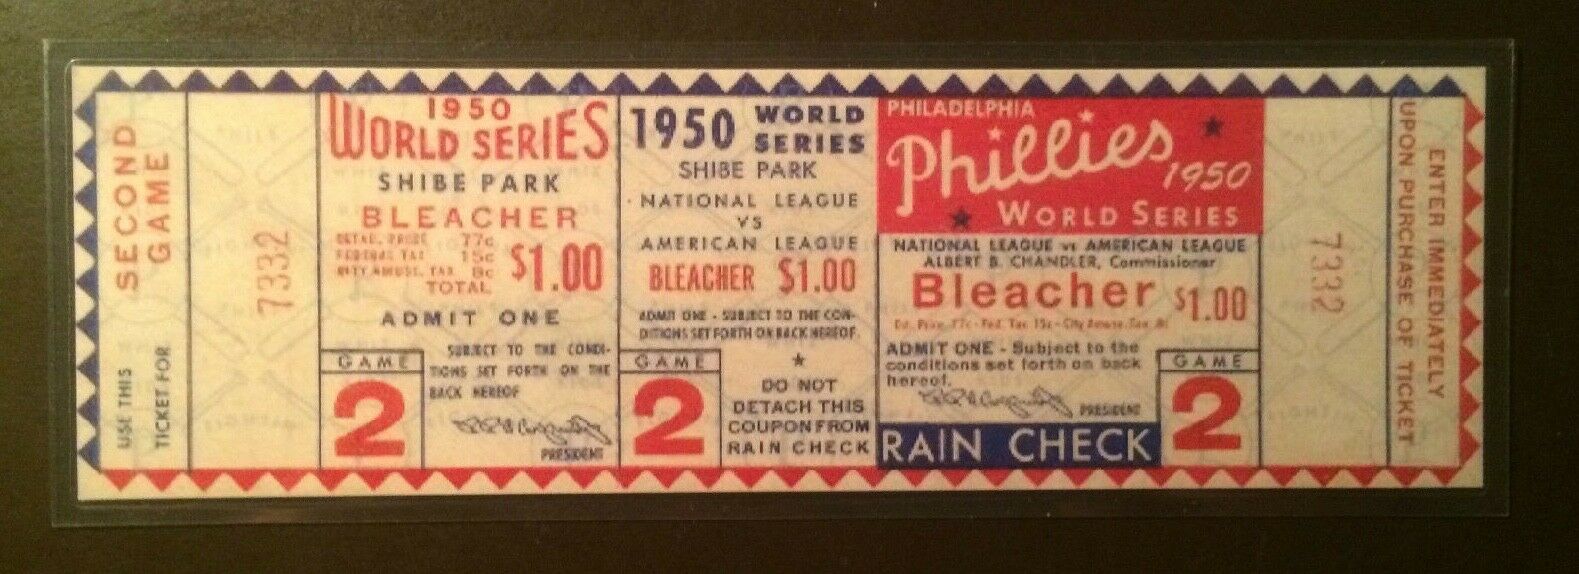 Philadelphia Phillies 1950 World Series Game 2 Replica Ticket Vs New York